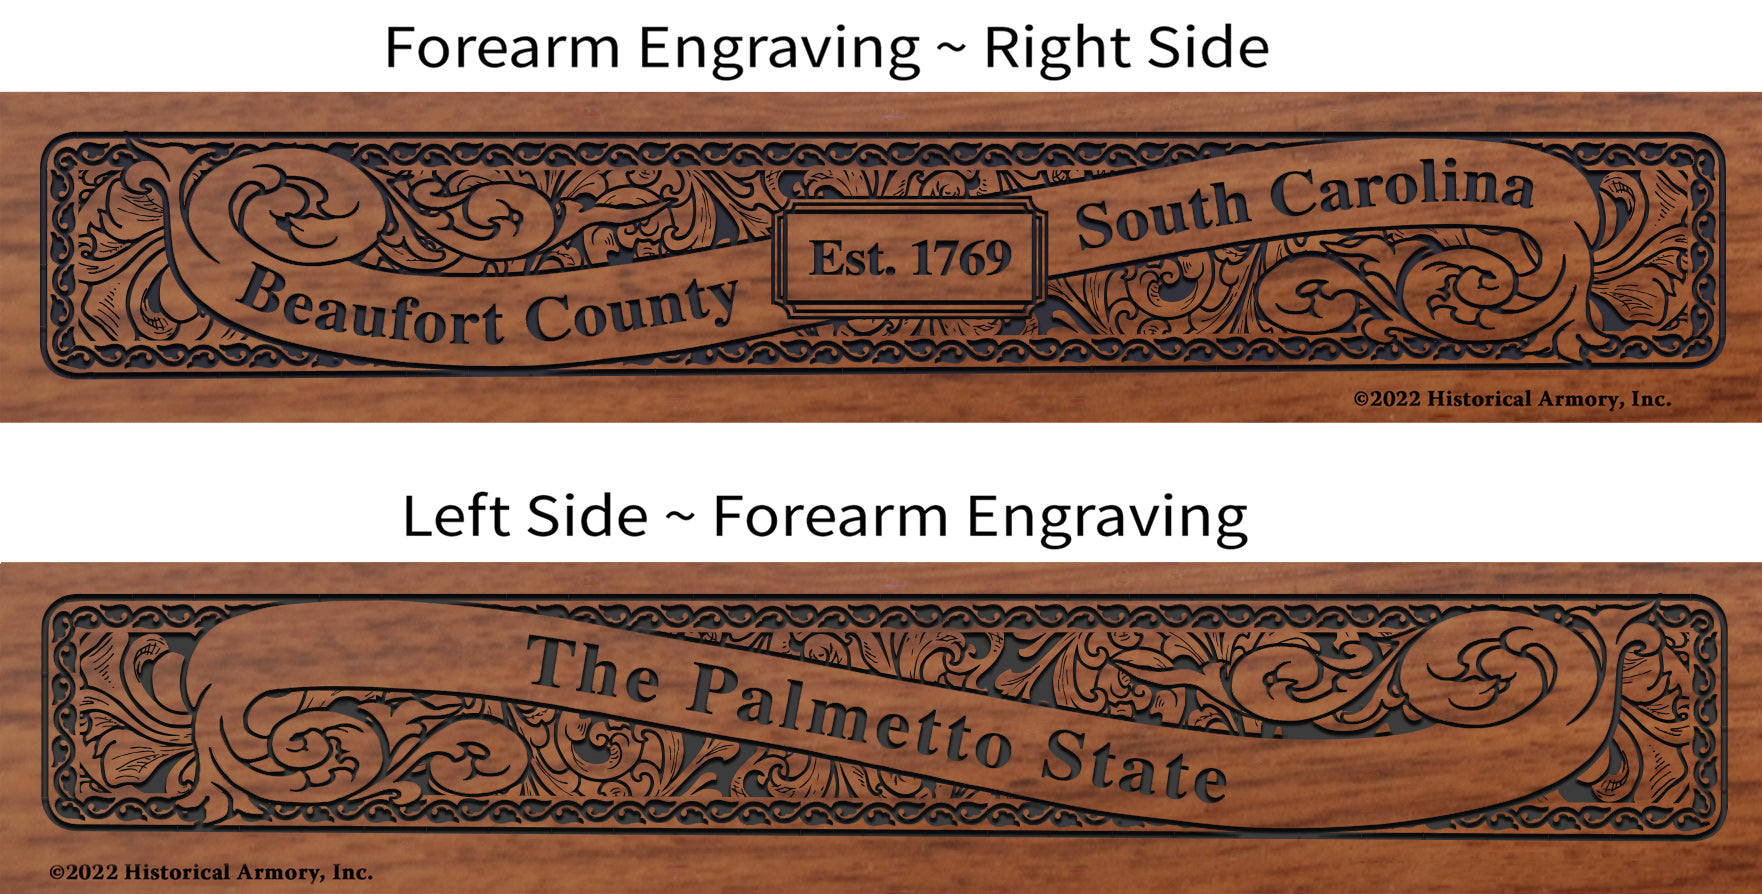 Beaufort County South Carolina Engraved Rifle Forearm